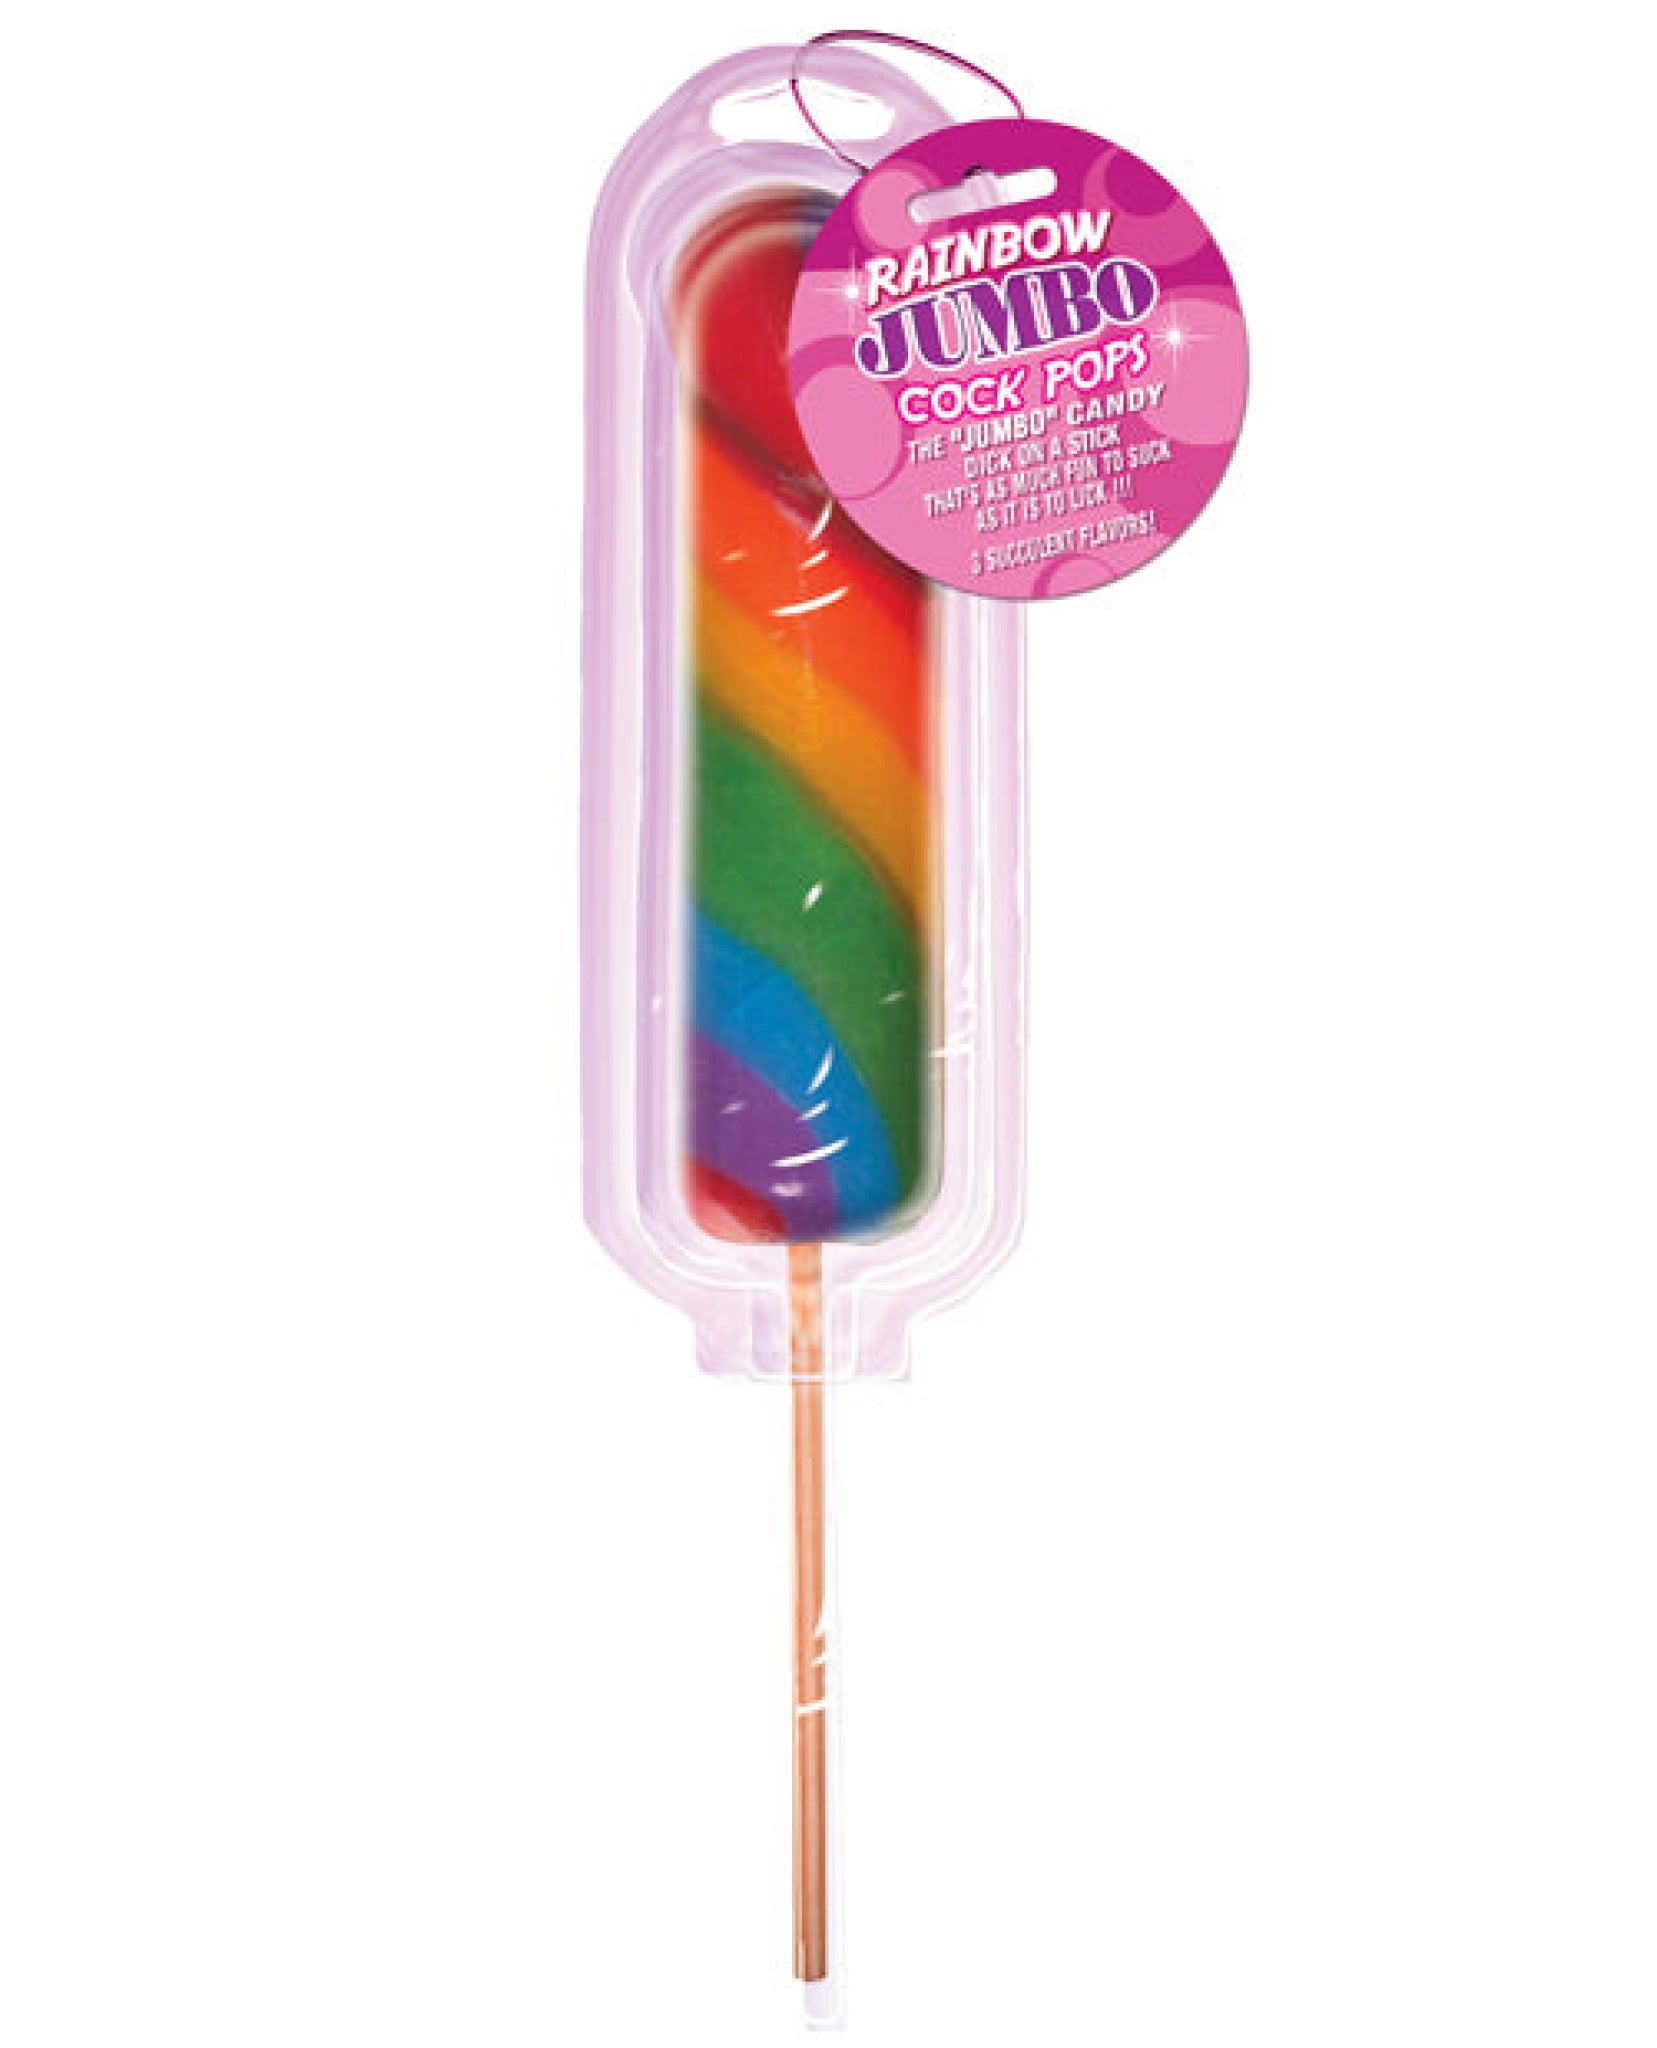 Jumbo Rainbow Pecker Pop On Blister Card Hott Products